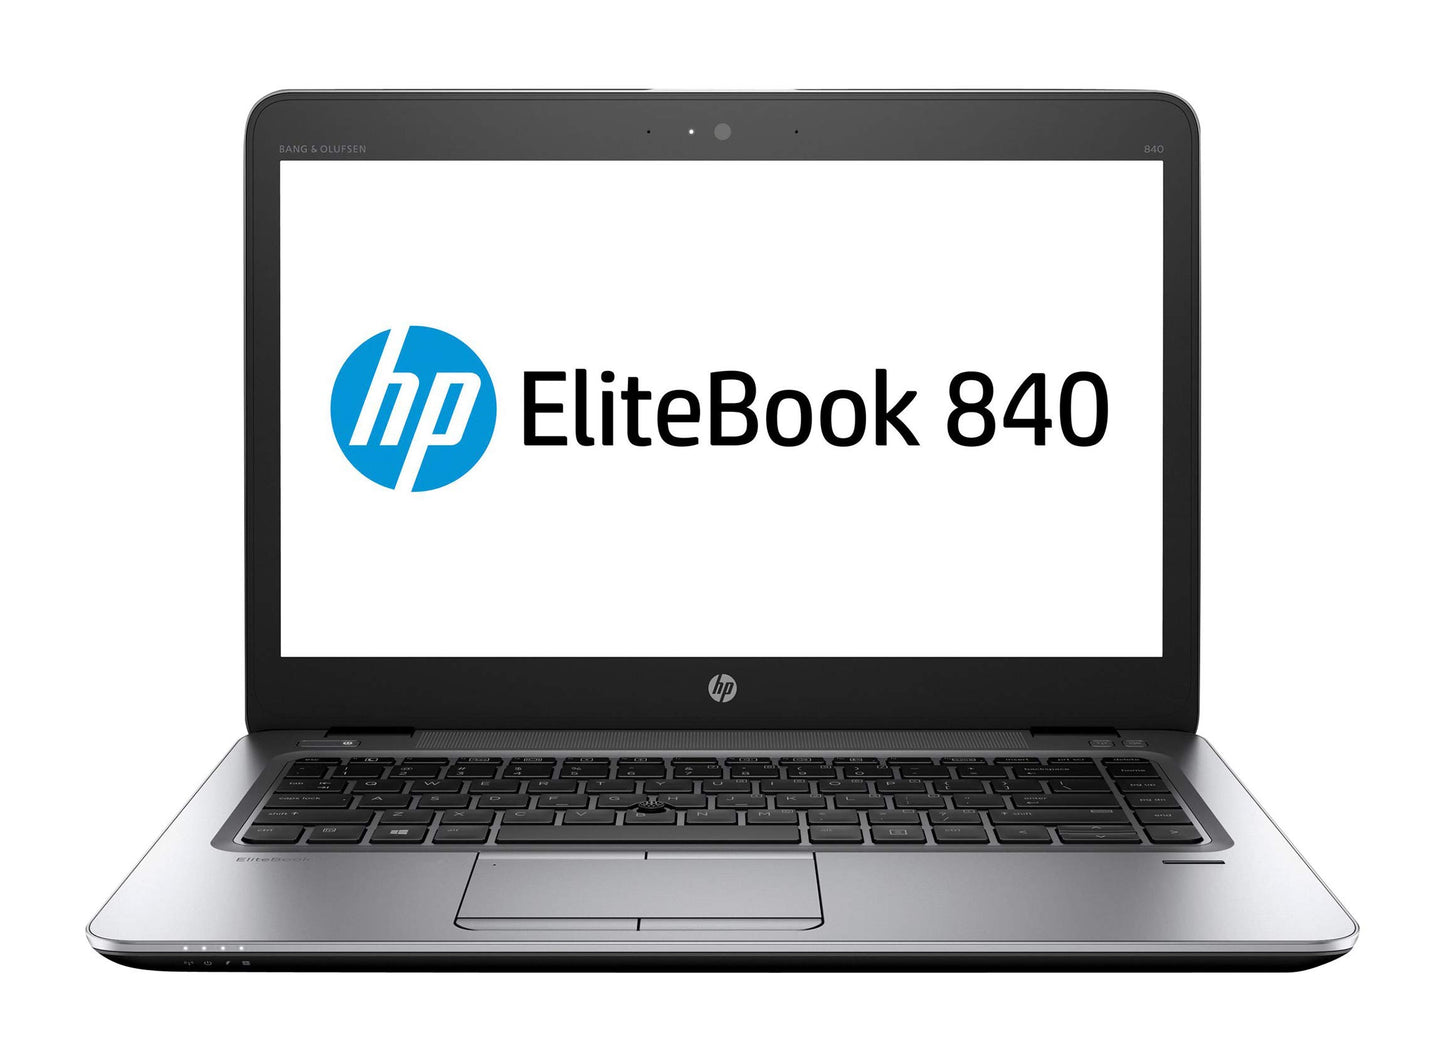 HP EliteBook 840 G3 Intel Core i5 6th Generation 16GB DDR4 RAM 512GB SSD HARD-DRIVE 14" FHD Windows 10 Pro 64-Bit Silver Laptop (Renewed)